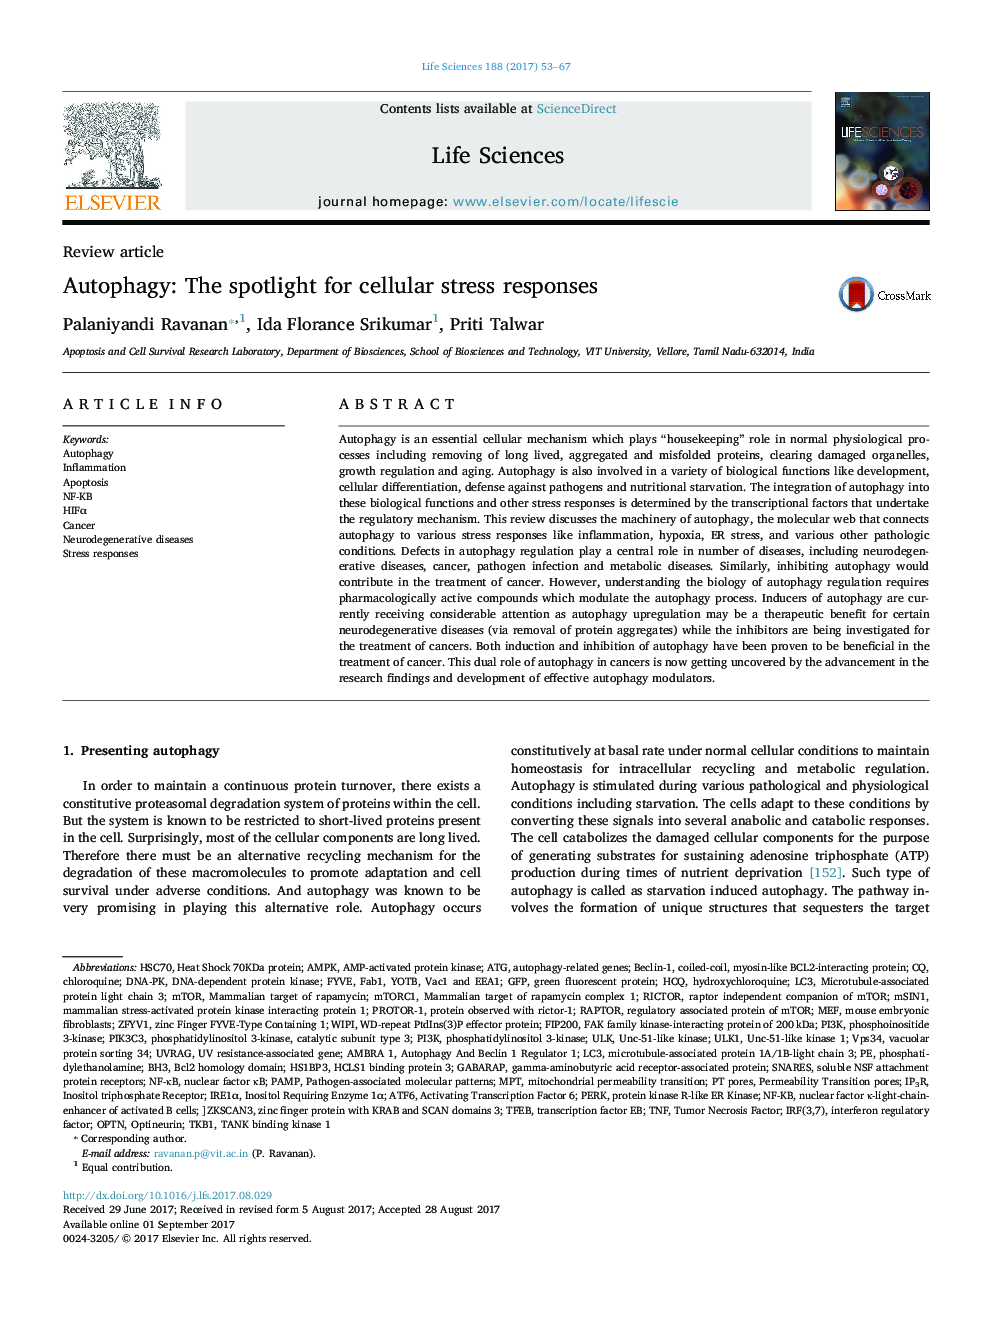 Autophagy: The spotlight for cellular stress responses